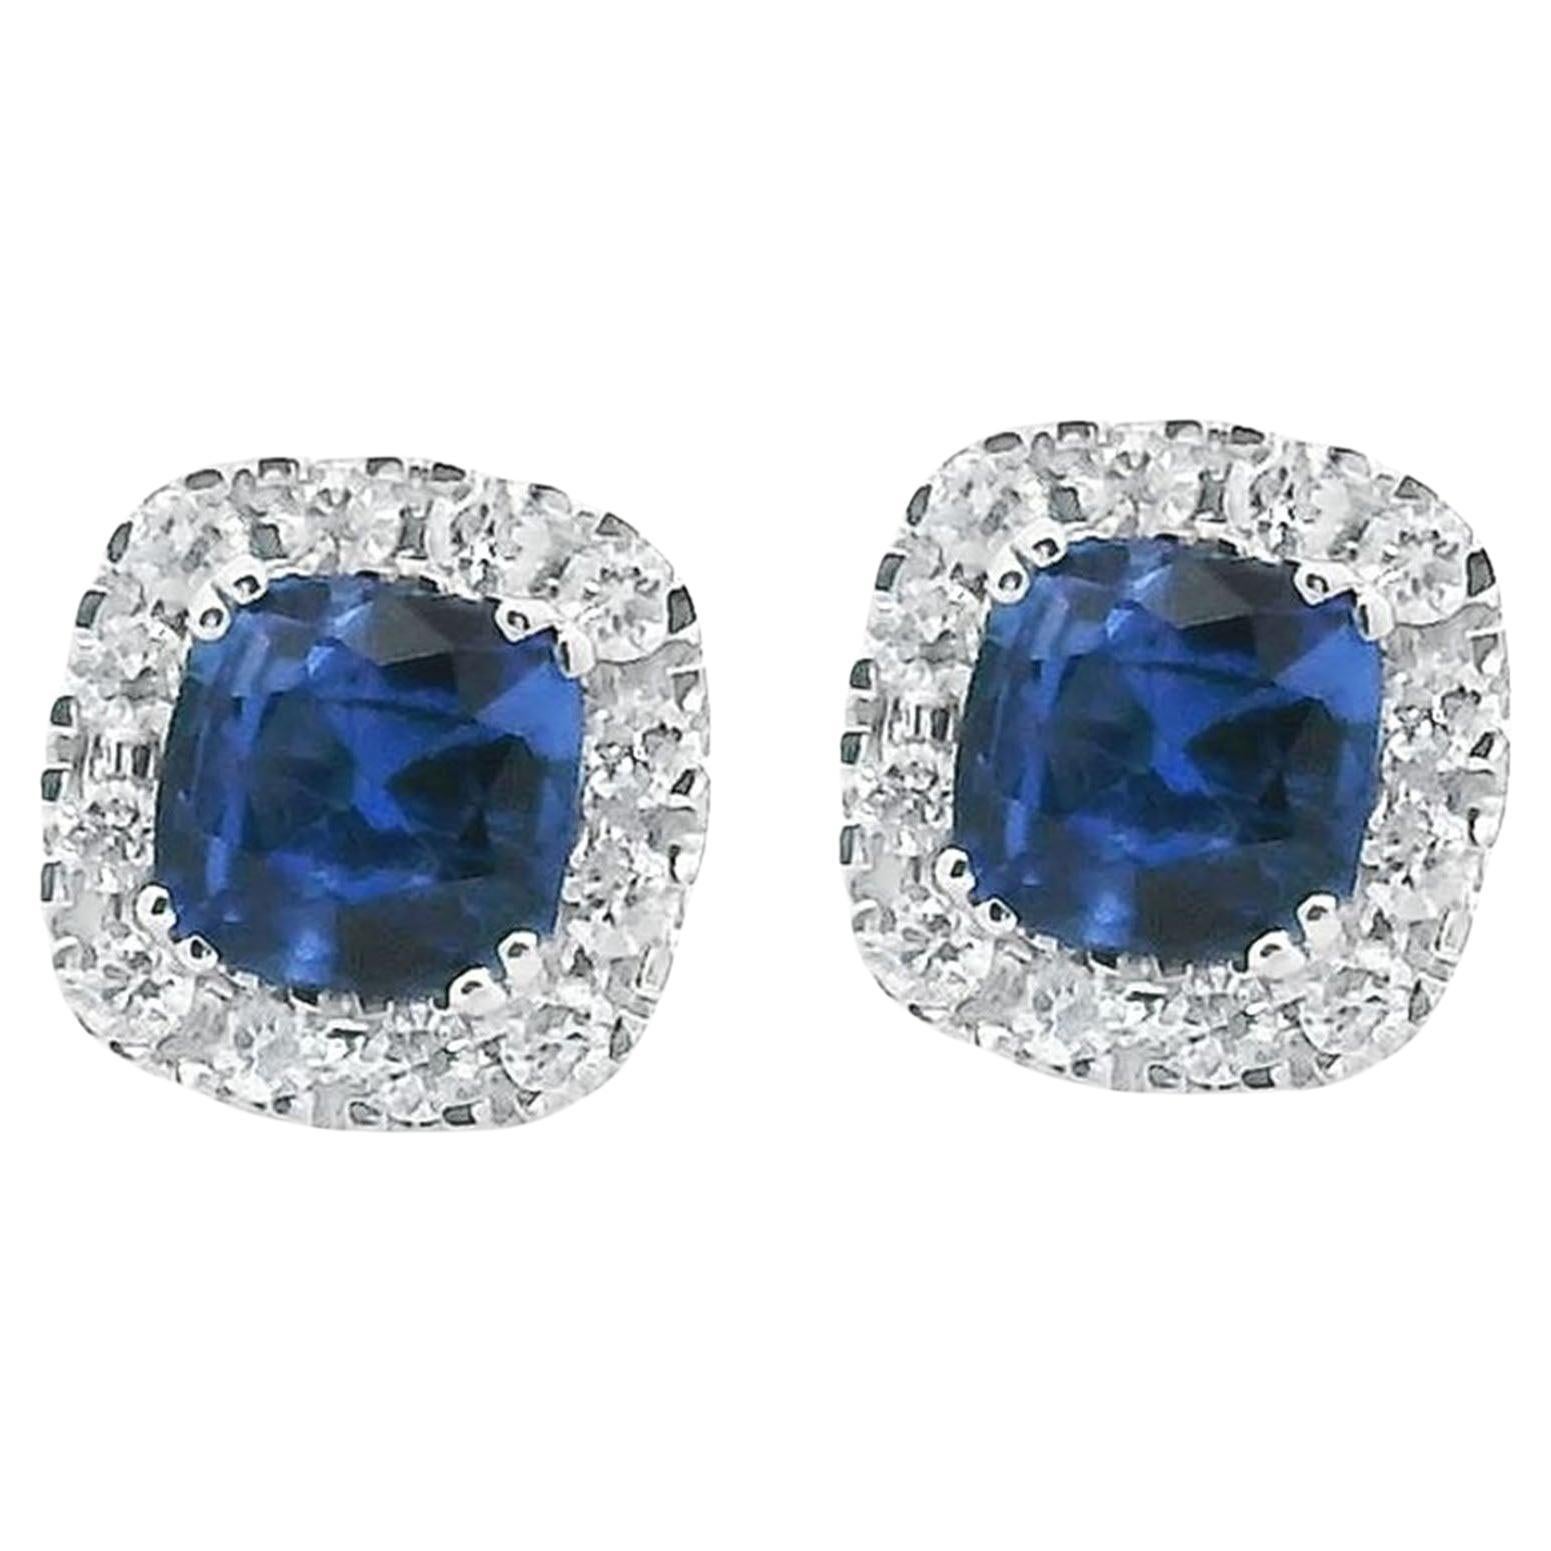 14K White Gold Diamond and Sapphire Stud Earrings